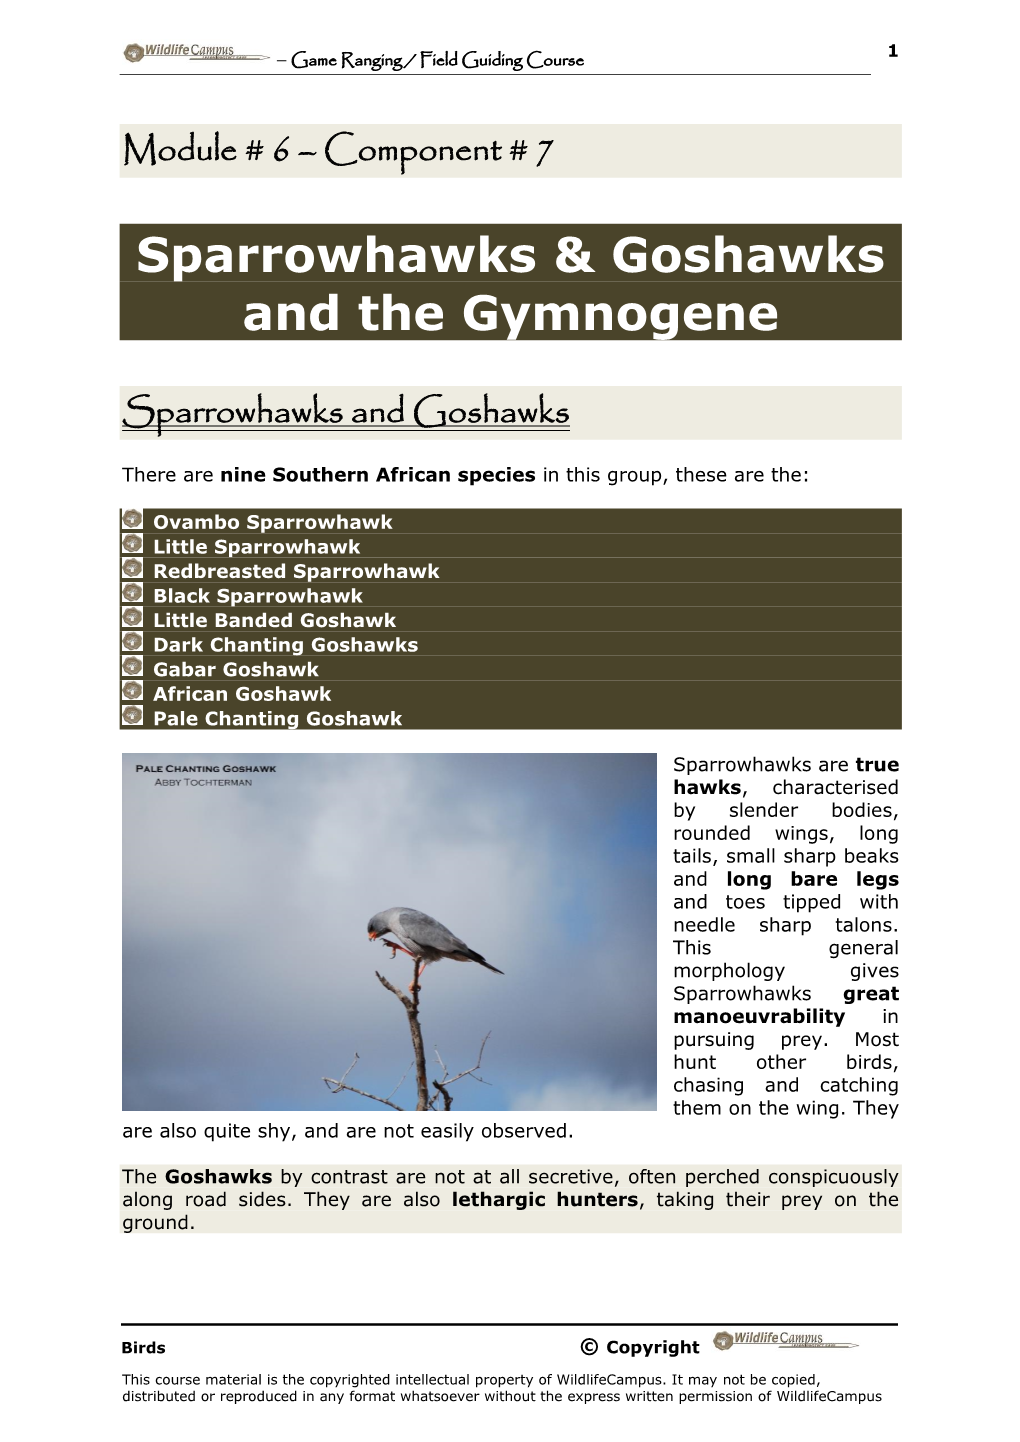 Sparrowhawks & Goshawks and the Gymnogene